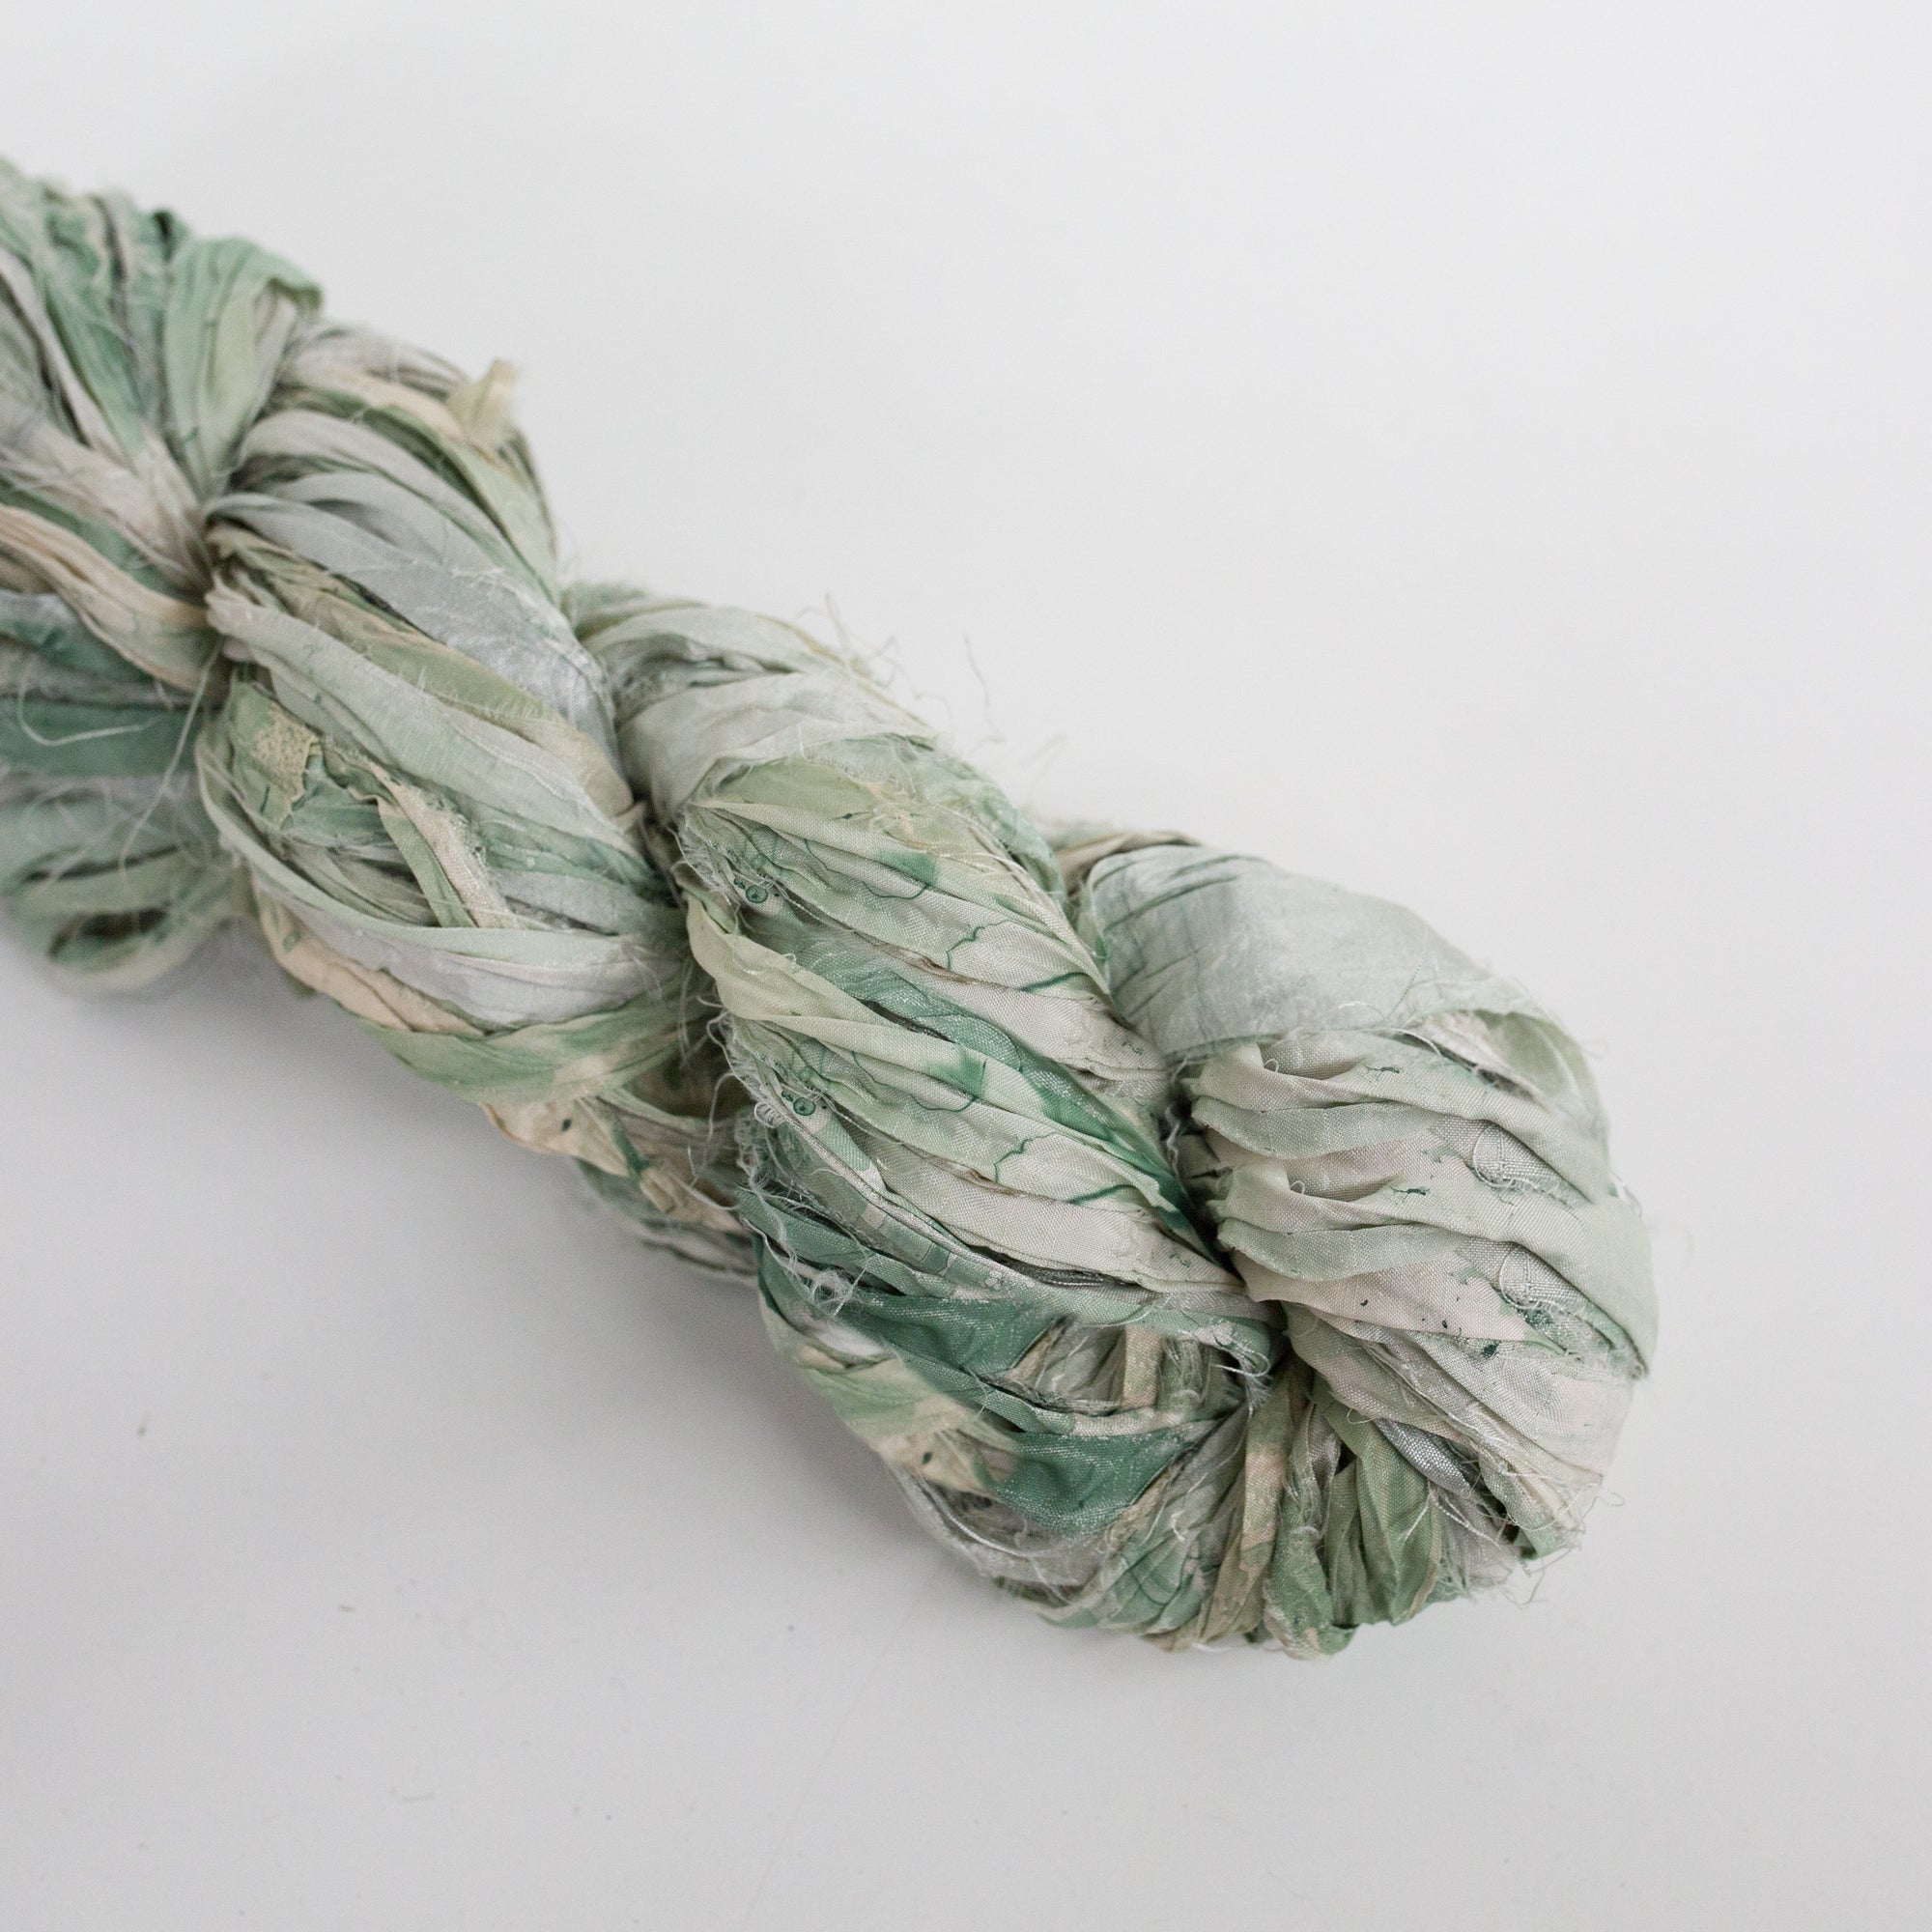 Mary Maker Studio ribbons Iced Jade Marble Recycled Sari Silk Ribbon macrame cotton macrame rope macrame workshop macrame patterns macrame